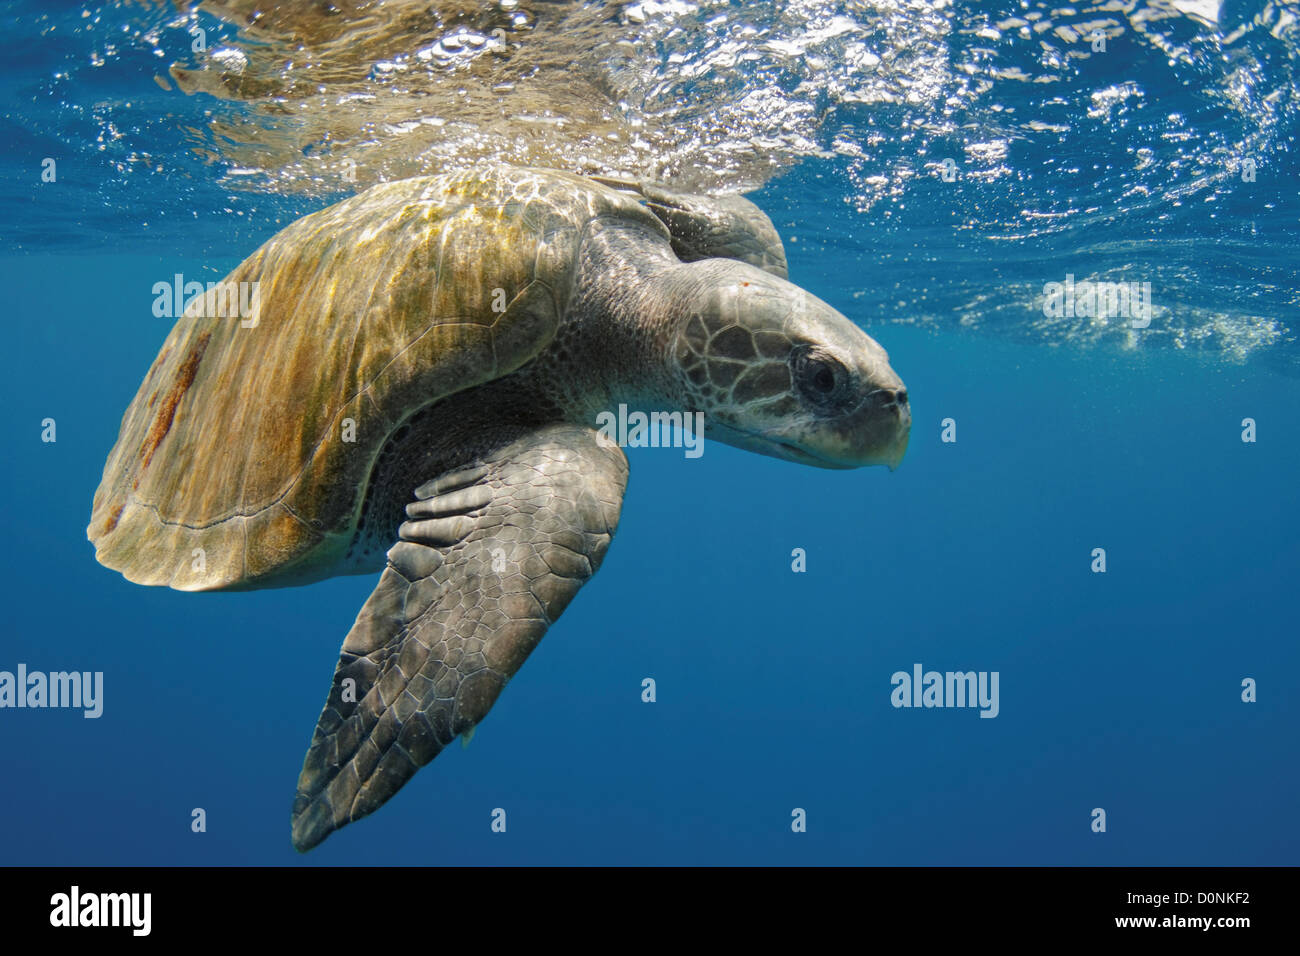 A olive ridley sea turtle (Lepidochelys olivacea), swimming in the open ocean off Sri Lanka. Stock Photo